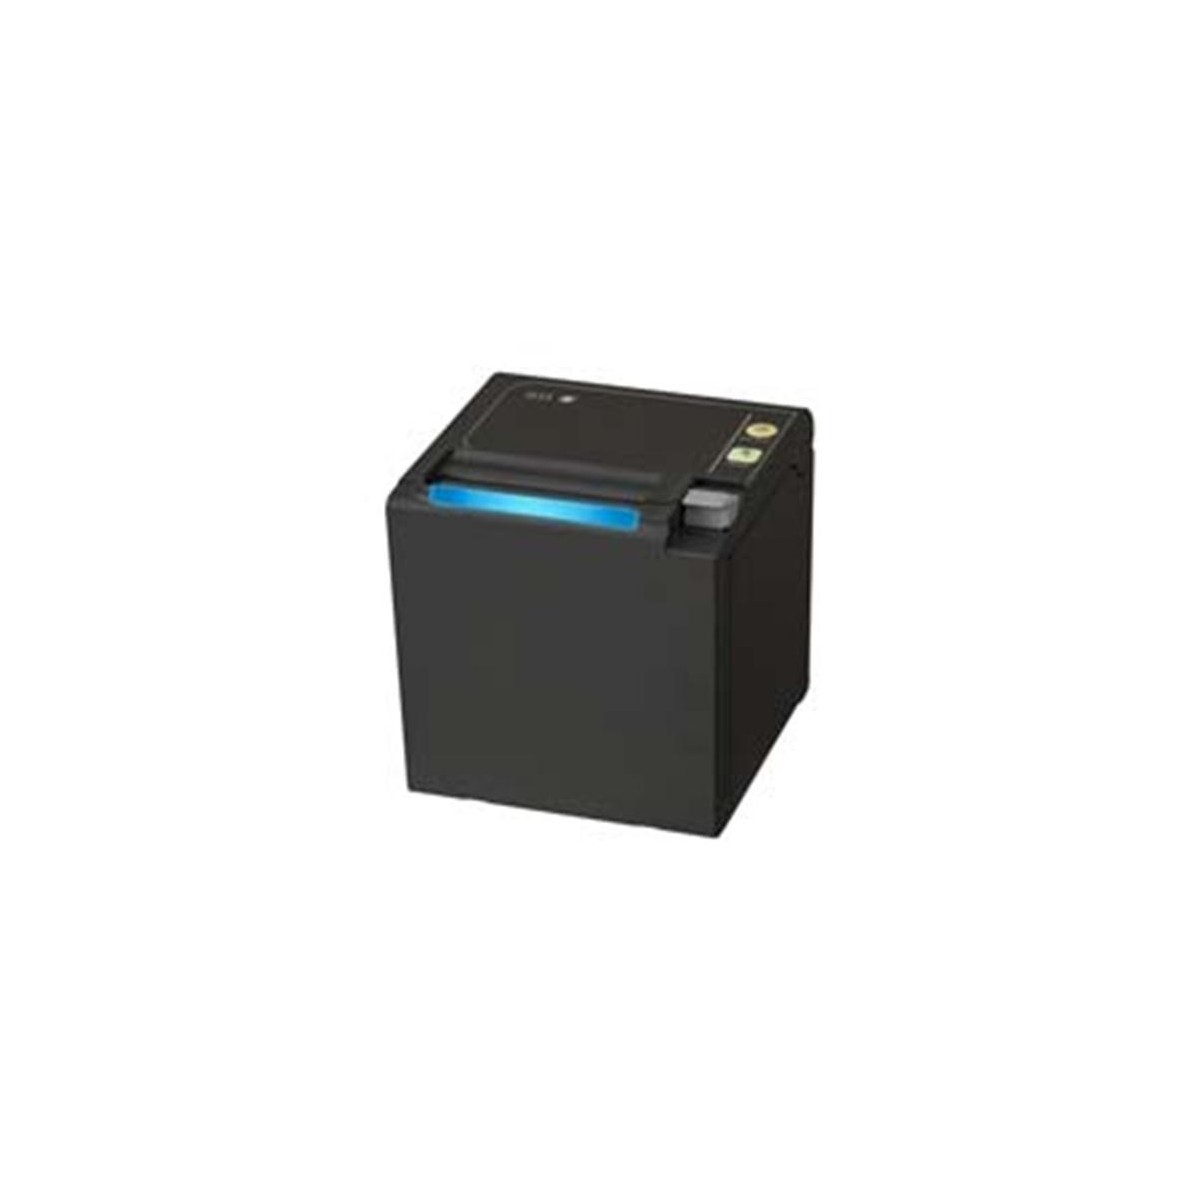 Seiko Instruments RP-E10-K3FJ1-U-C5 - Thermal - POS printer - 203 x 203 DPI - 350 mm/sec - 8.3 cm - 58 - 80 mm